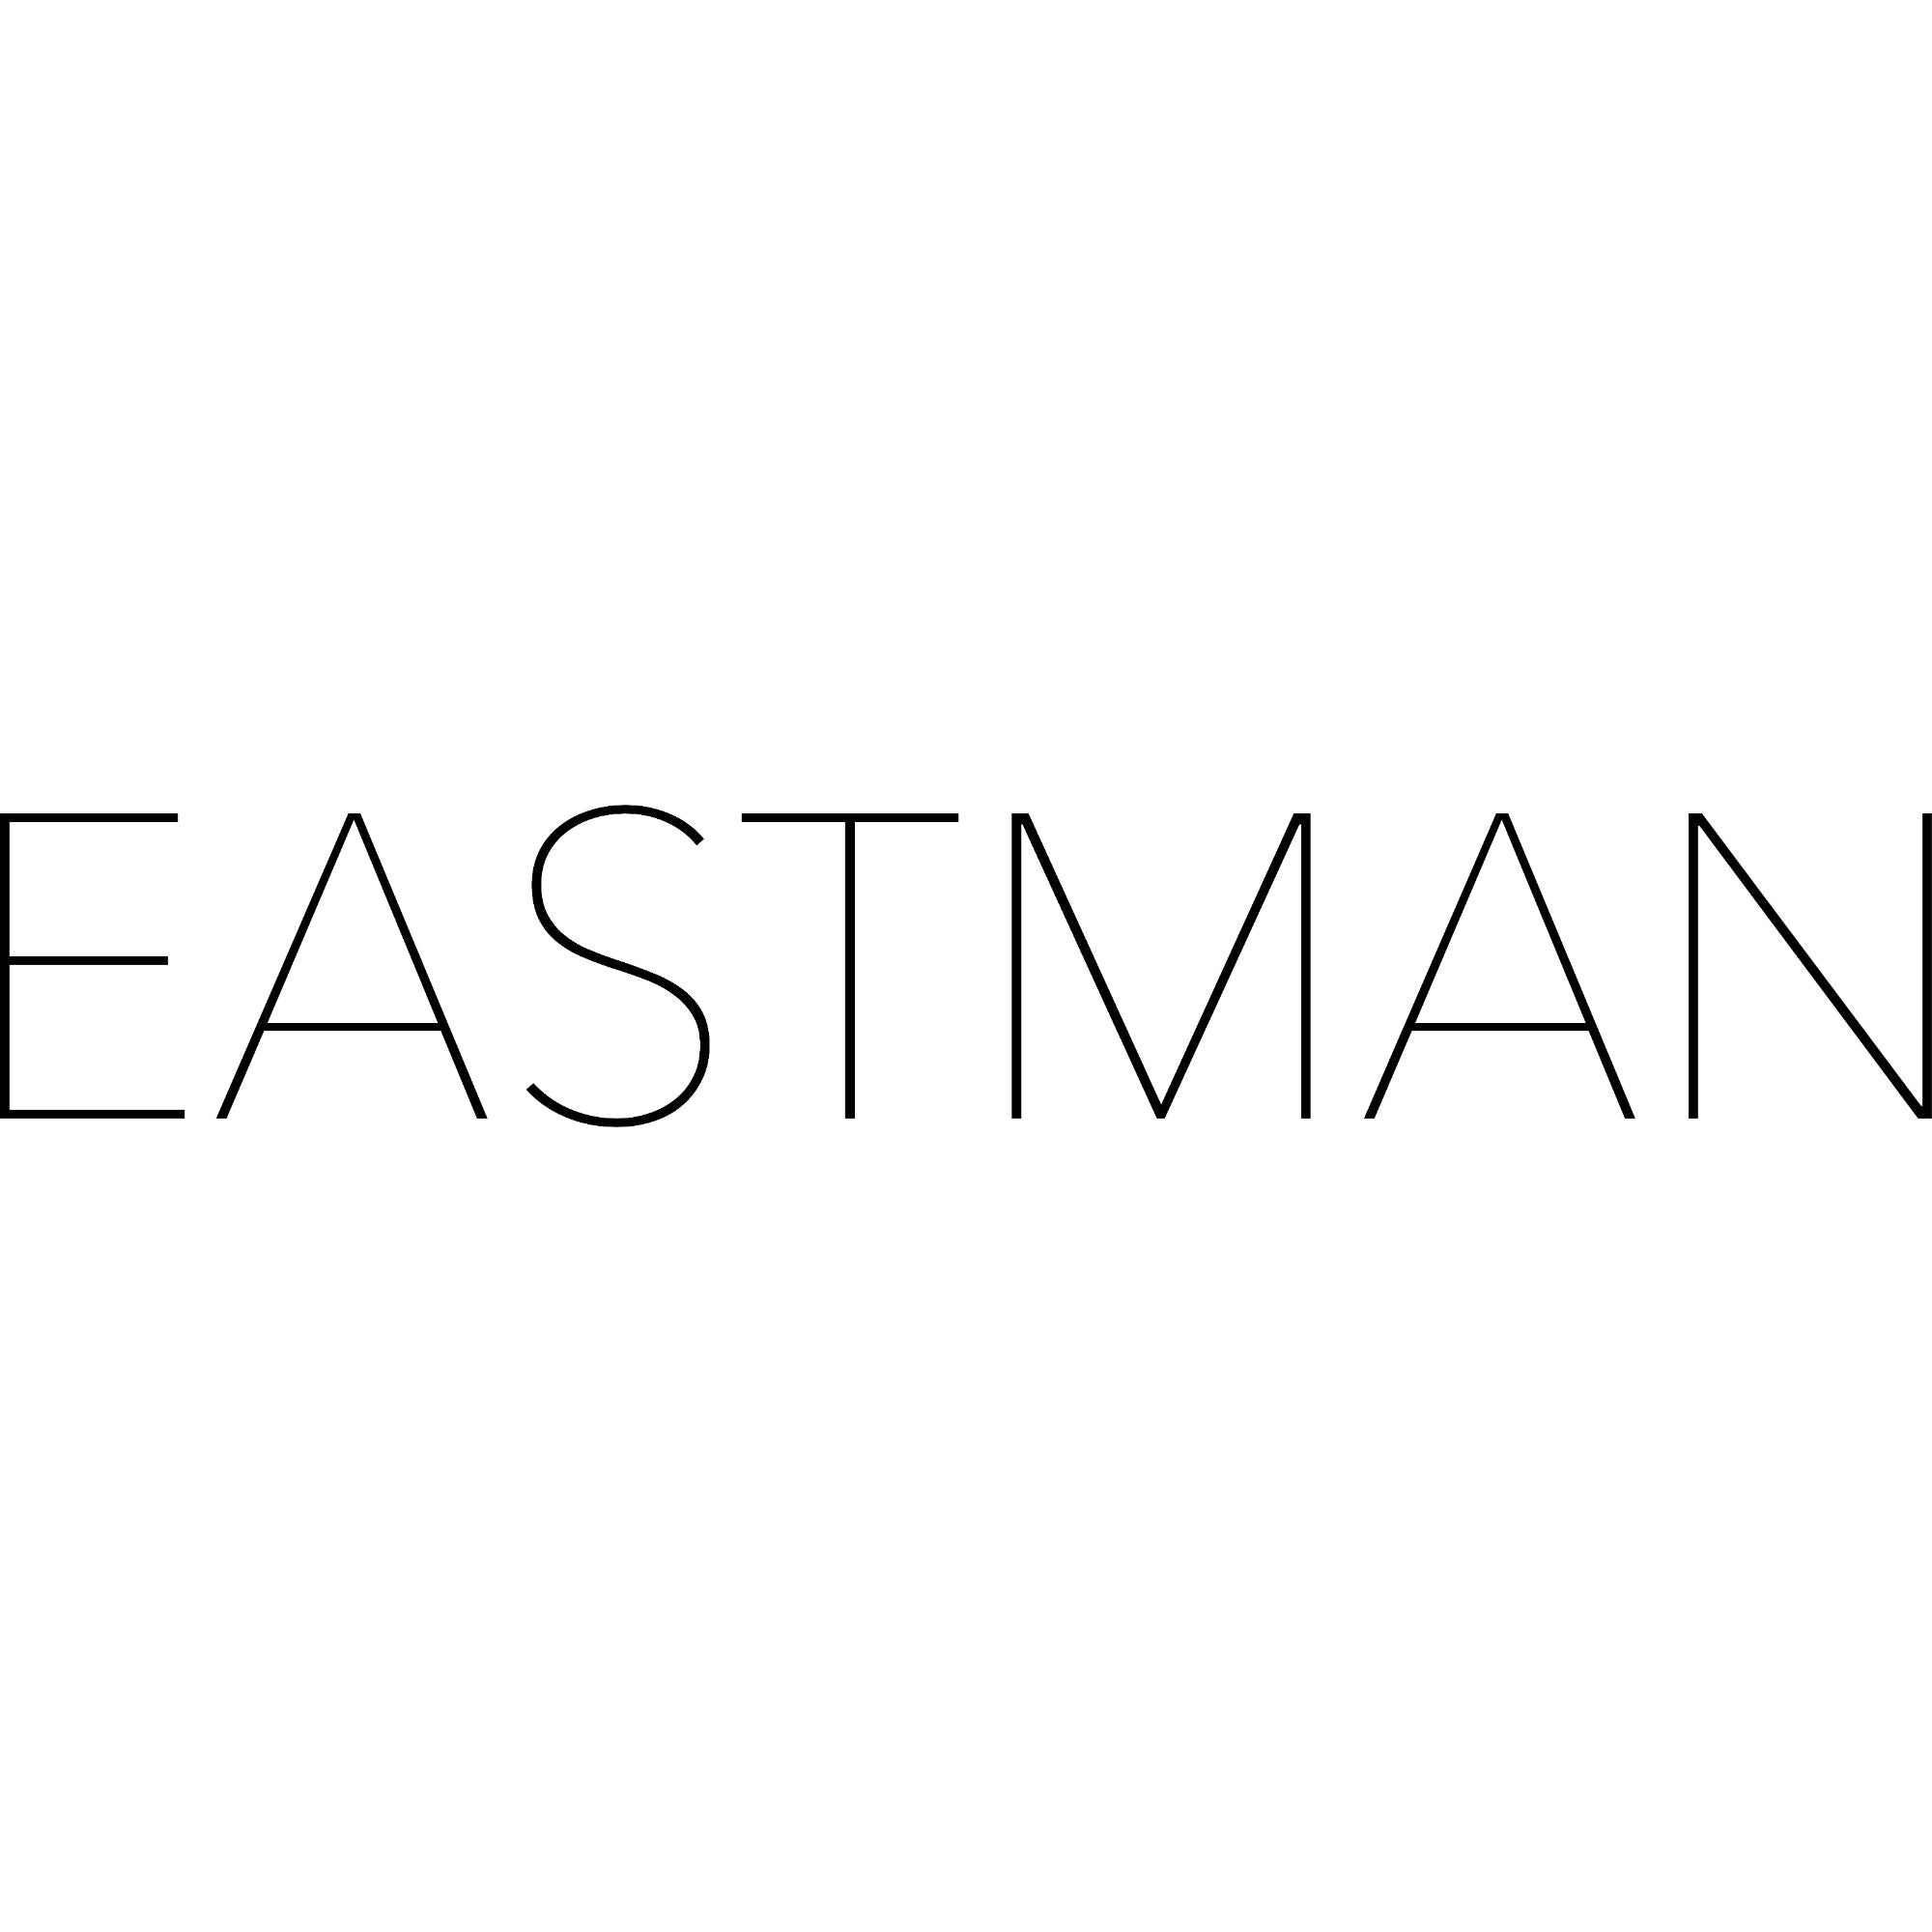 Eastman Guitars AC422CE Acoustic-Electric